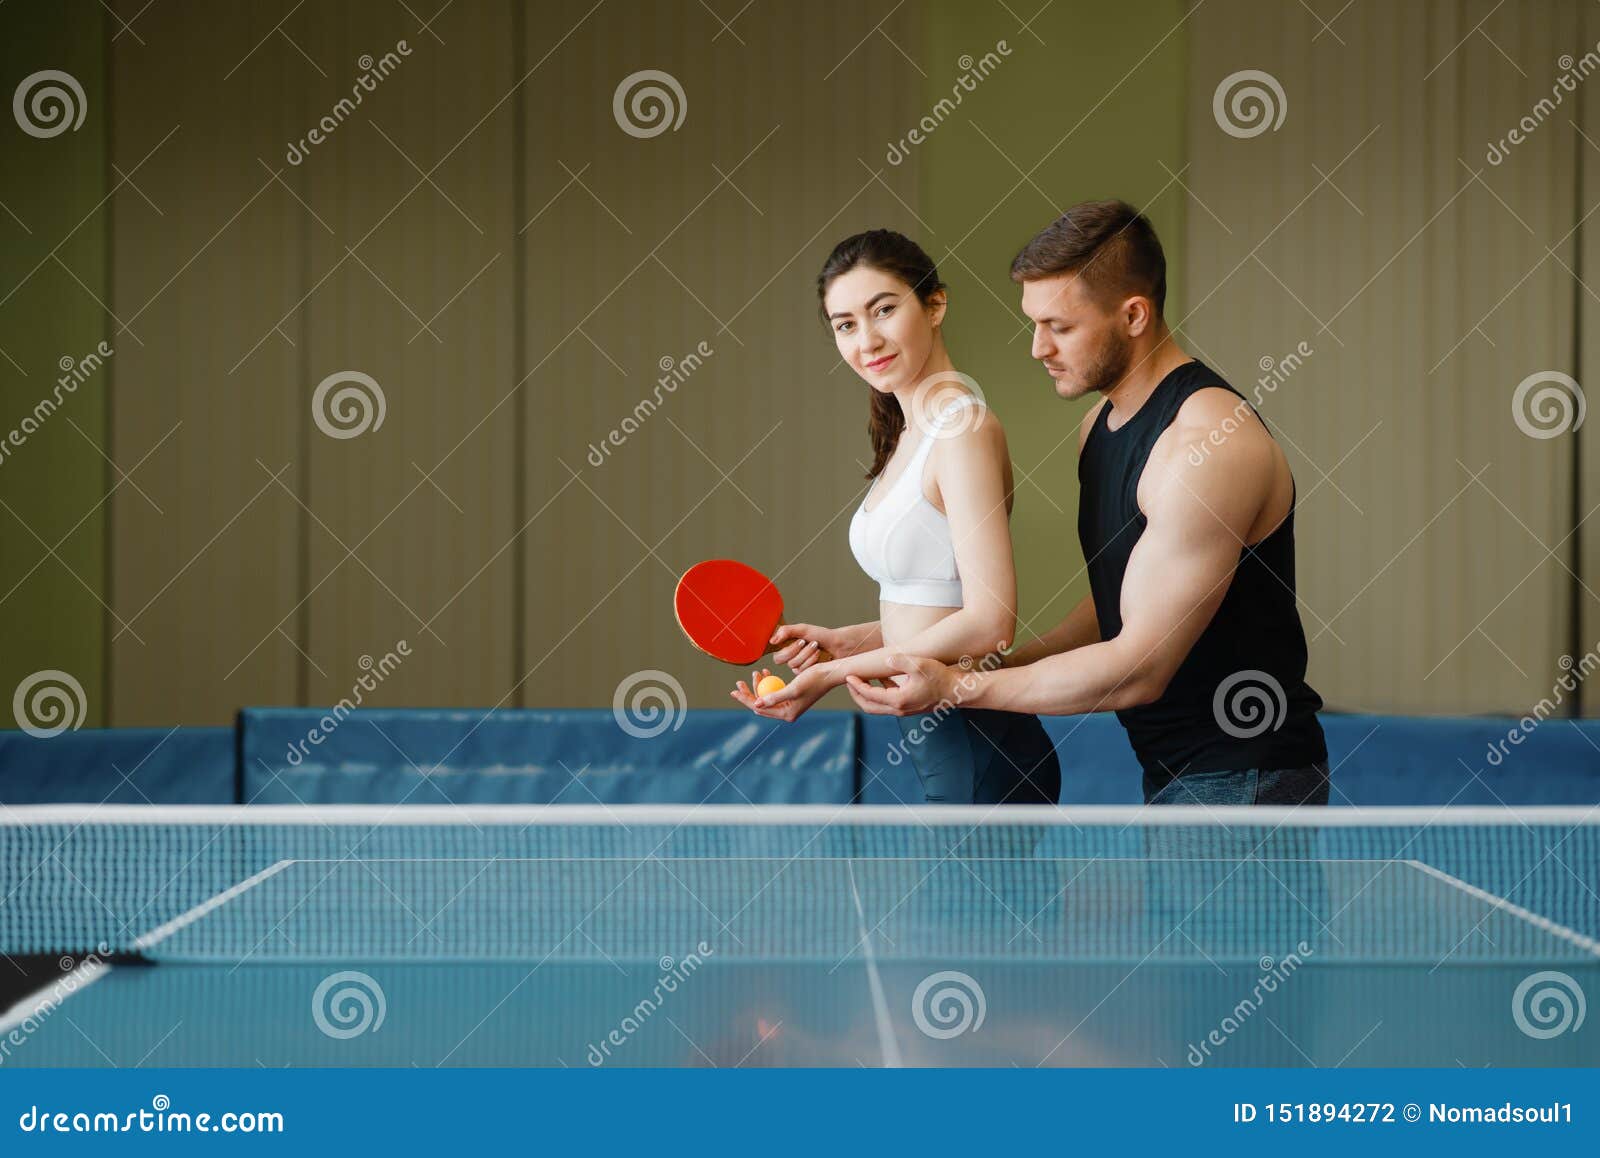 El Hombre Enseña a Una Mujer a Jugar a Ping-pong Foto de archivo - Imagen  de perfecto, apestar: 151894272